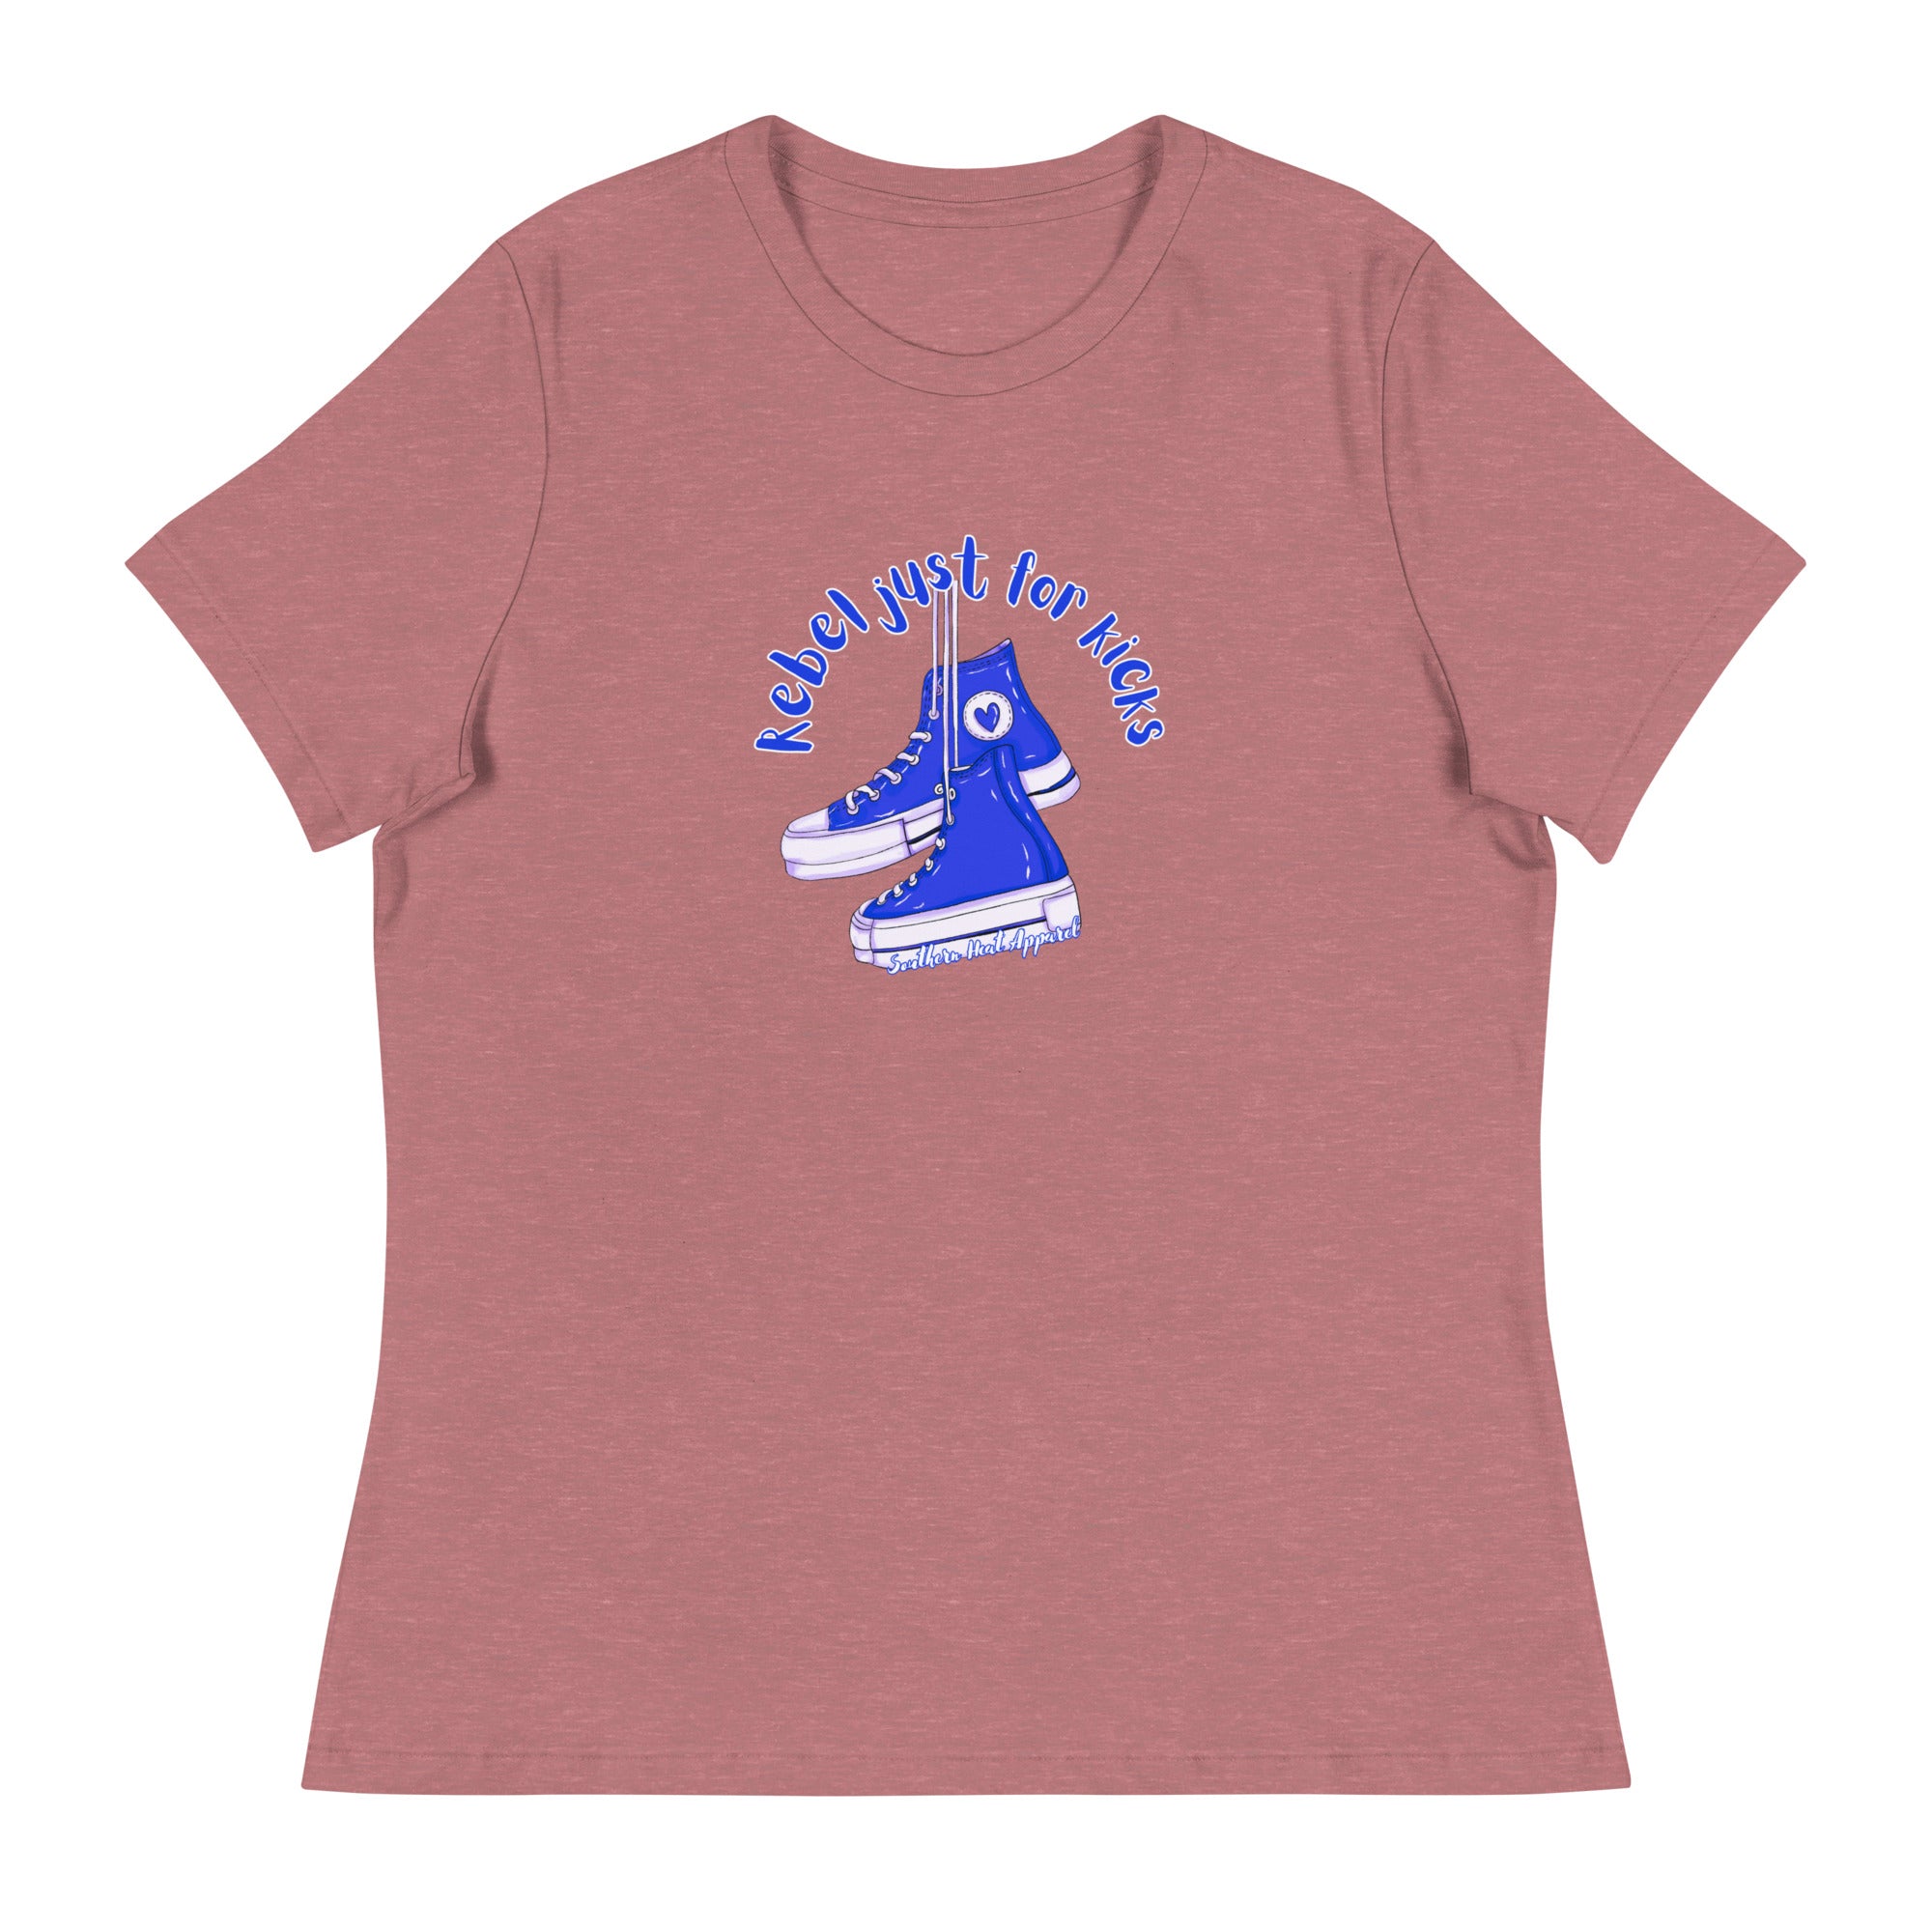 Rebel.just.for.kicks-Women's Relaxed T-Shirt